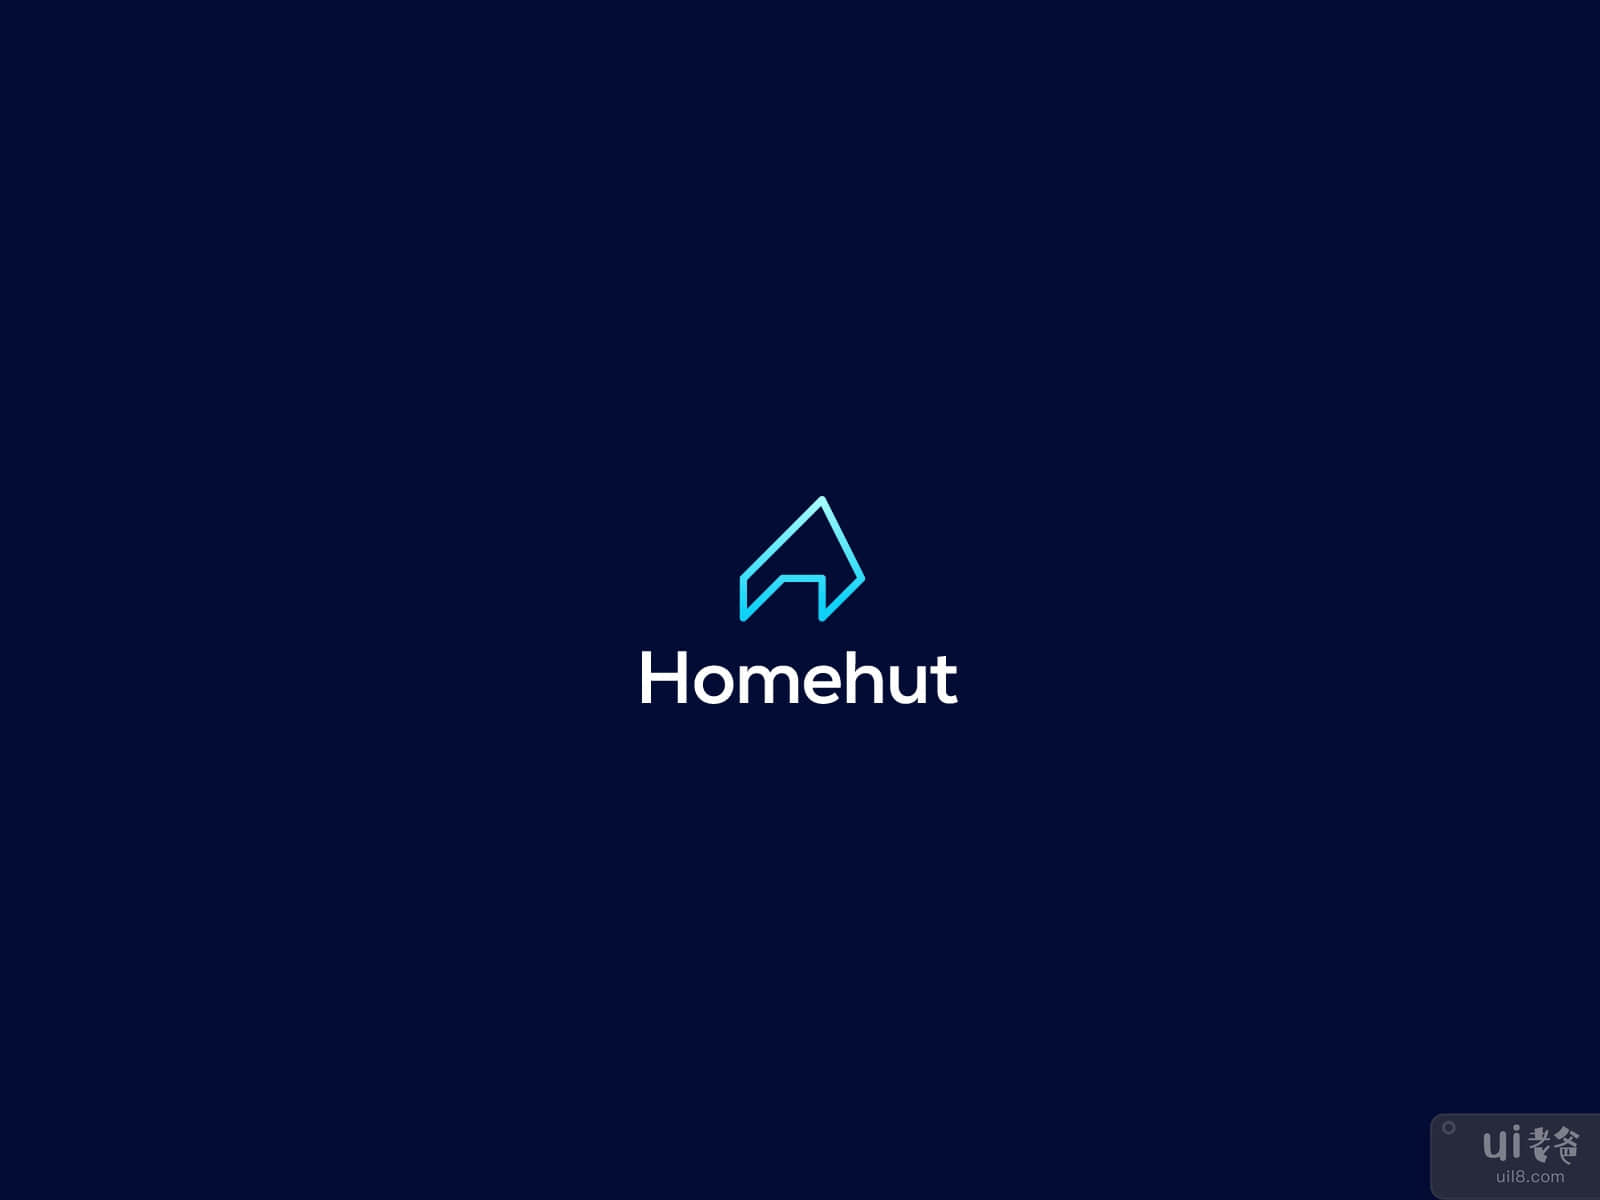 Home logo - H letter - Minimal logo design